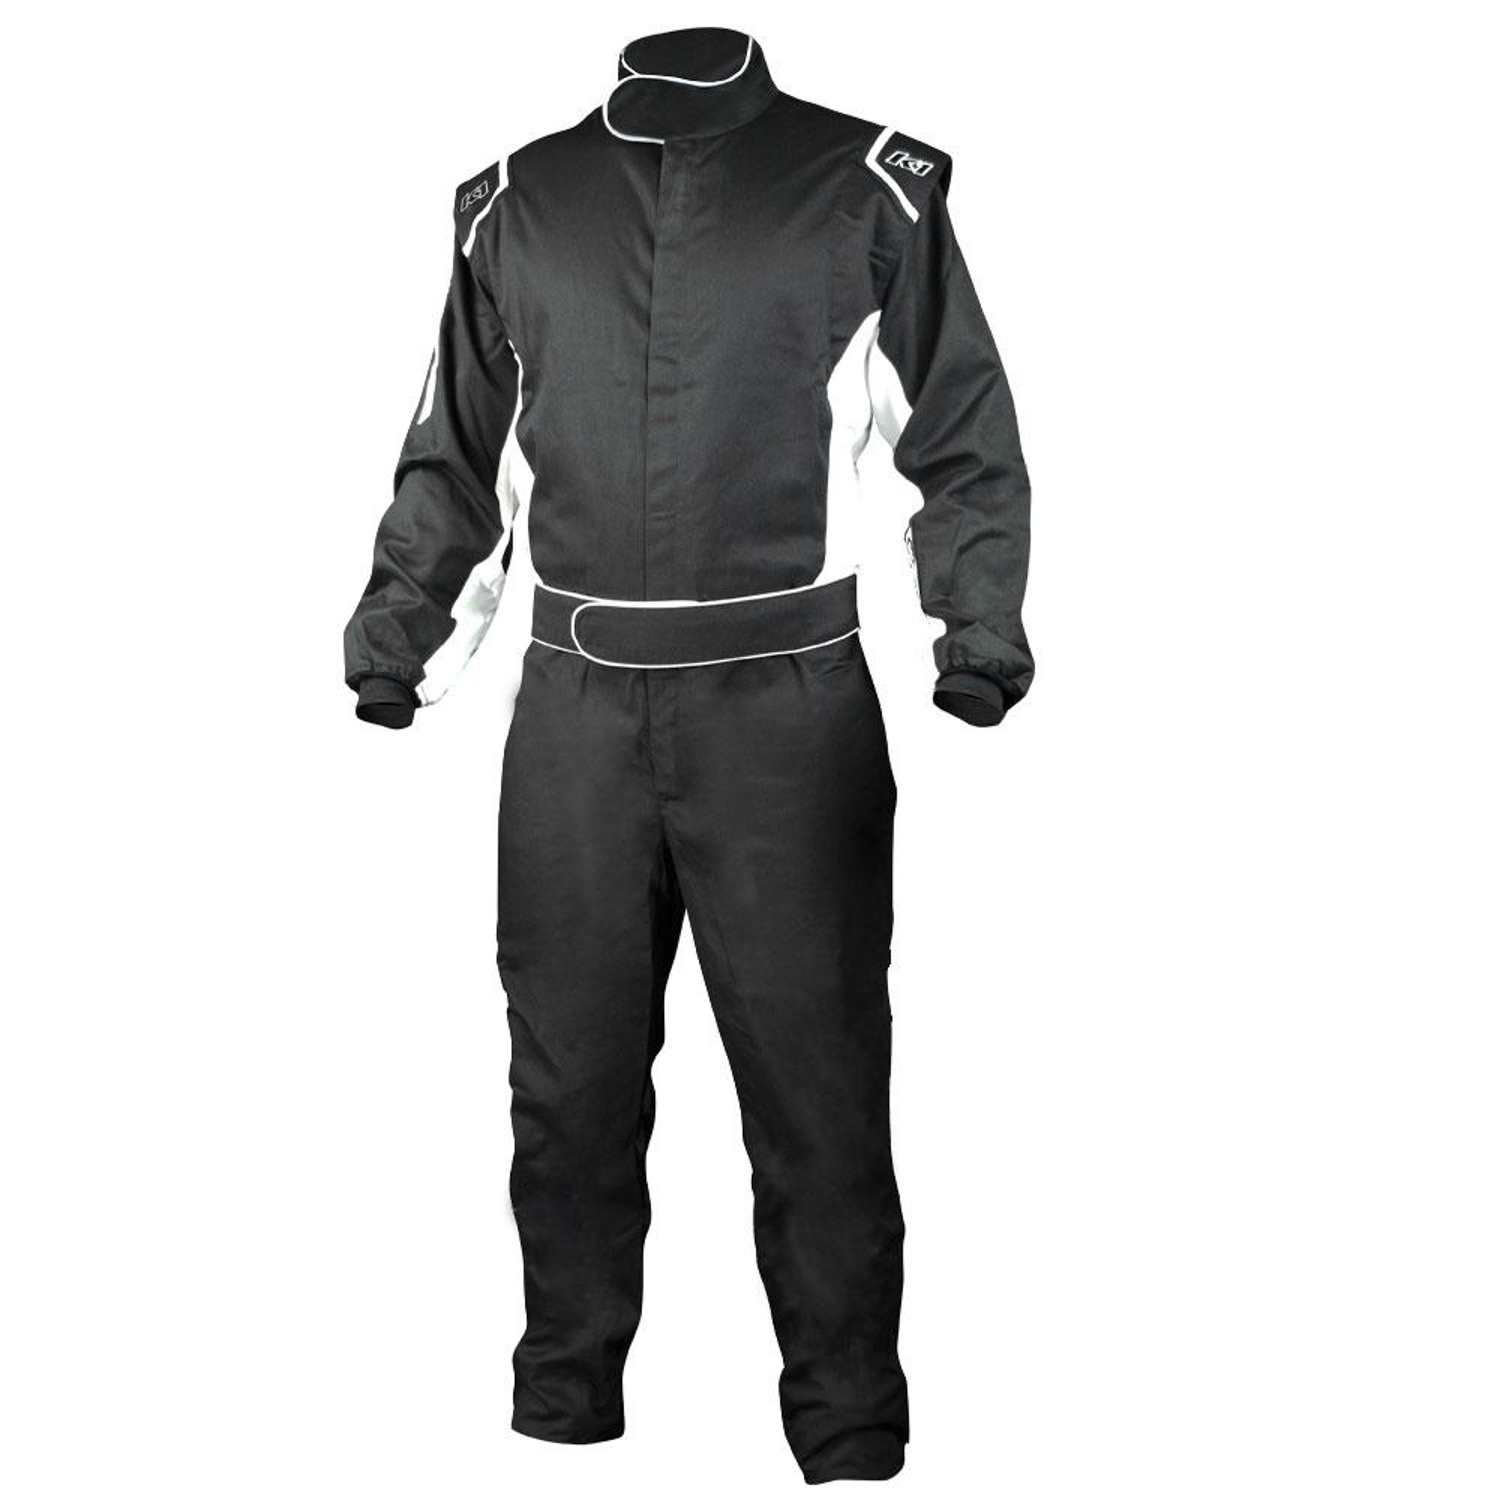 K1 Racegear 20-CHL-NW-LXL Driving Suit, Challenger, 1-Piece, SFI 3.2A/1, Single Layer, Fire Retardant Cotton, Boot Cut, Black, Large / X-Large, Each